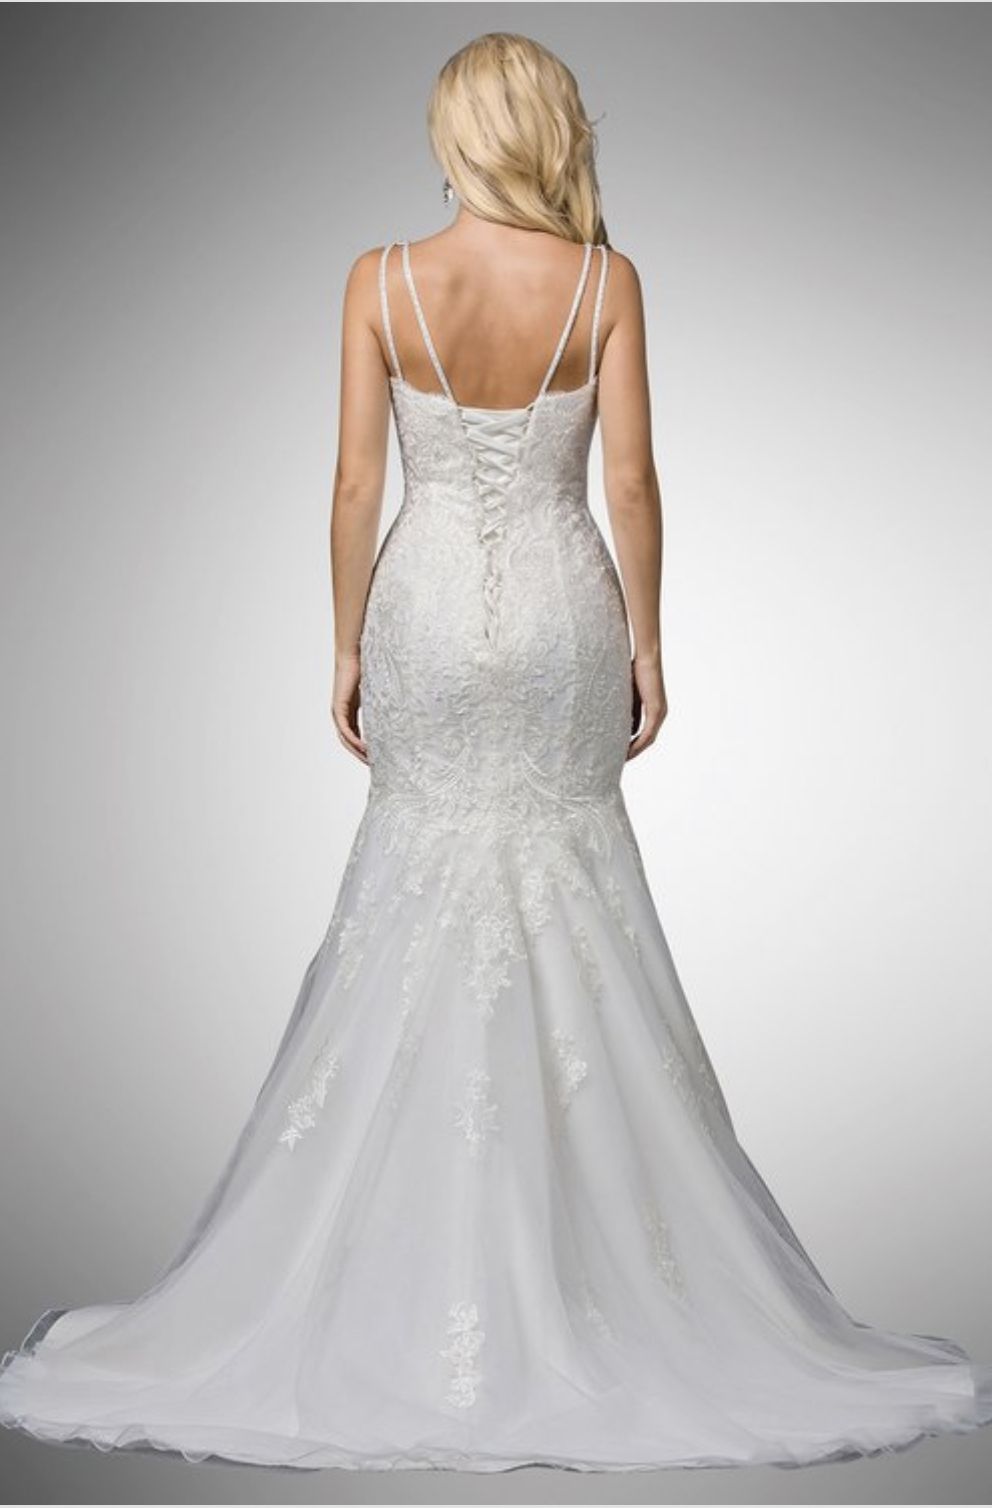 Plus Size 16 Wedding White Mermaid Dress on Queenly